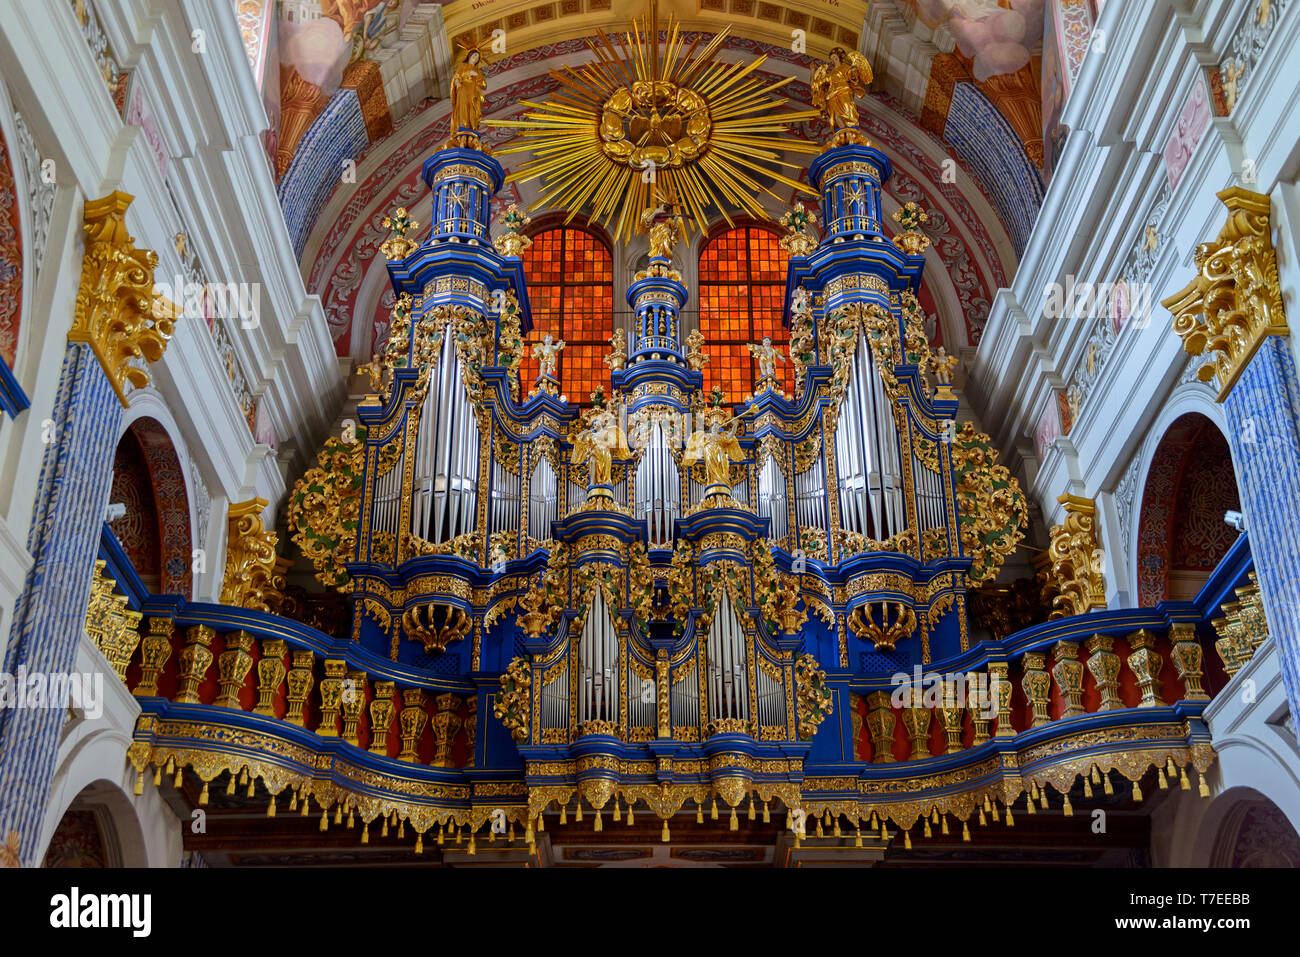 Organ, Sanctuary, Swieta Lipka, Warmia Masuria, Poland Stock Photo